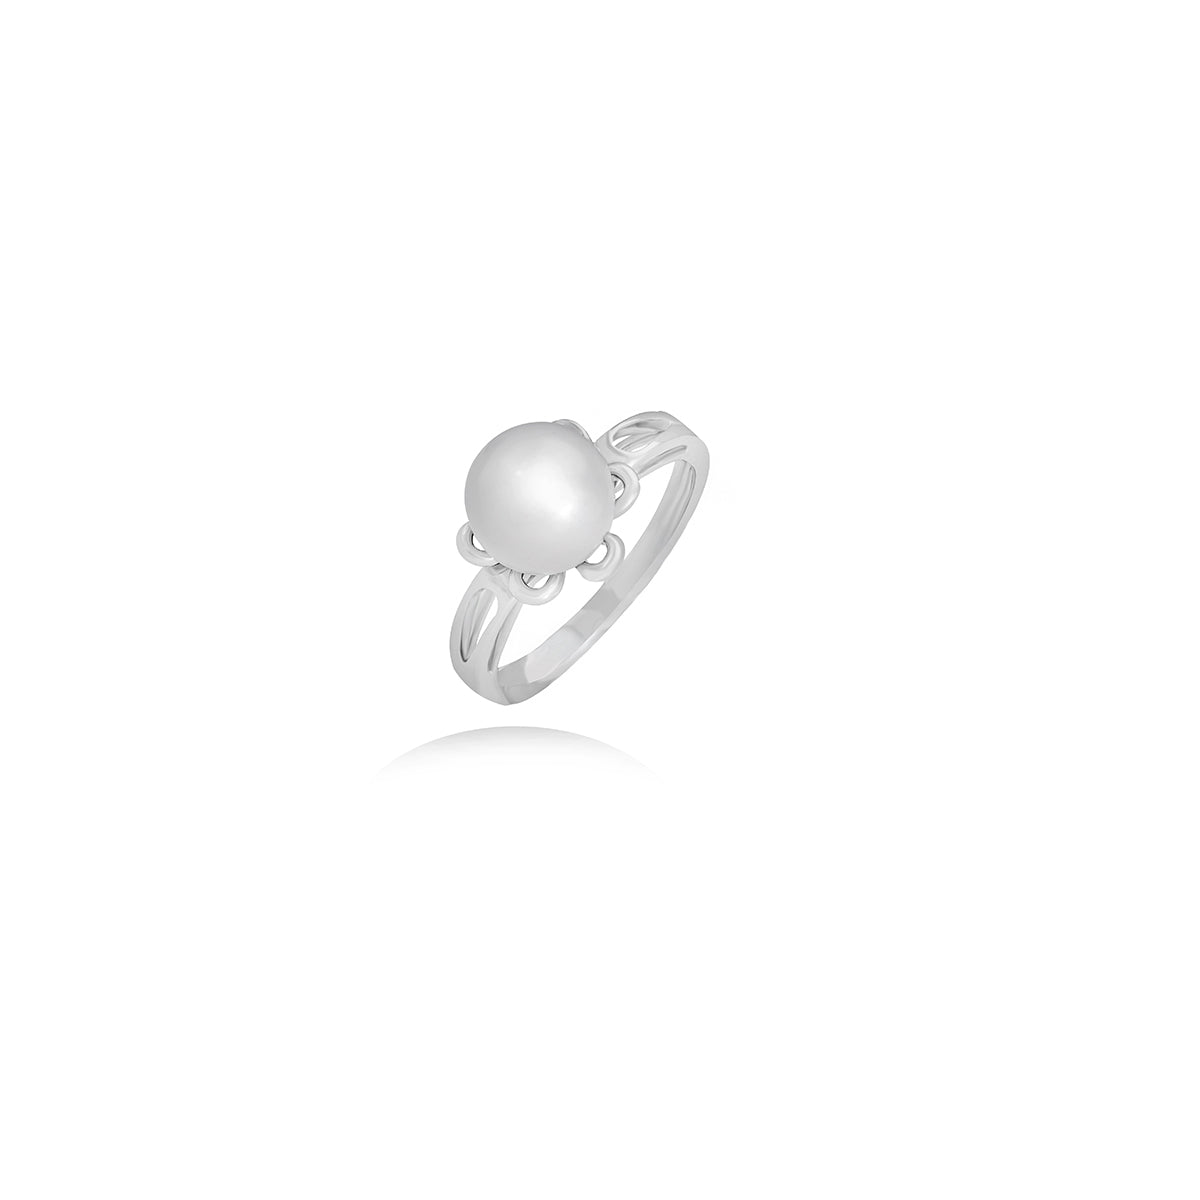 White Pearl Ring in 18k White Gold